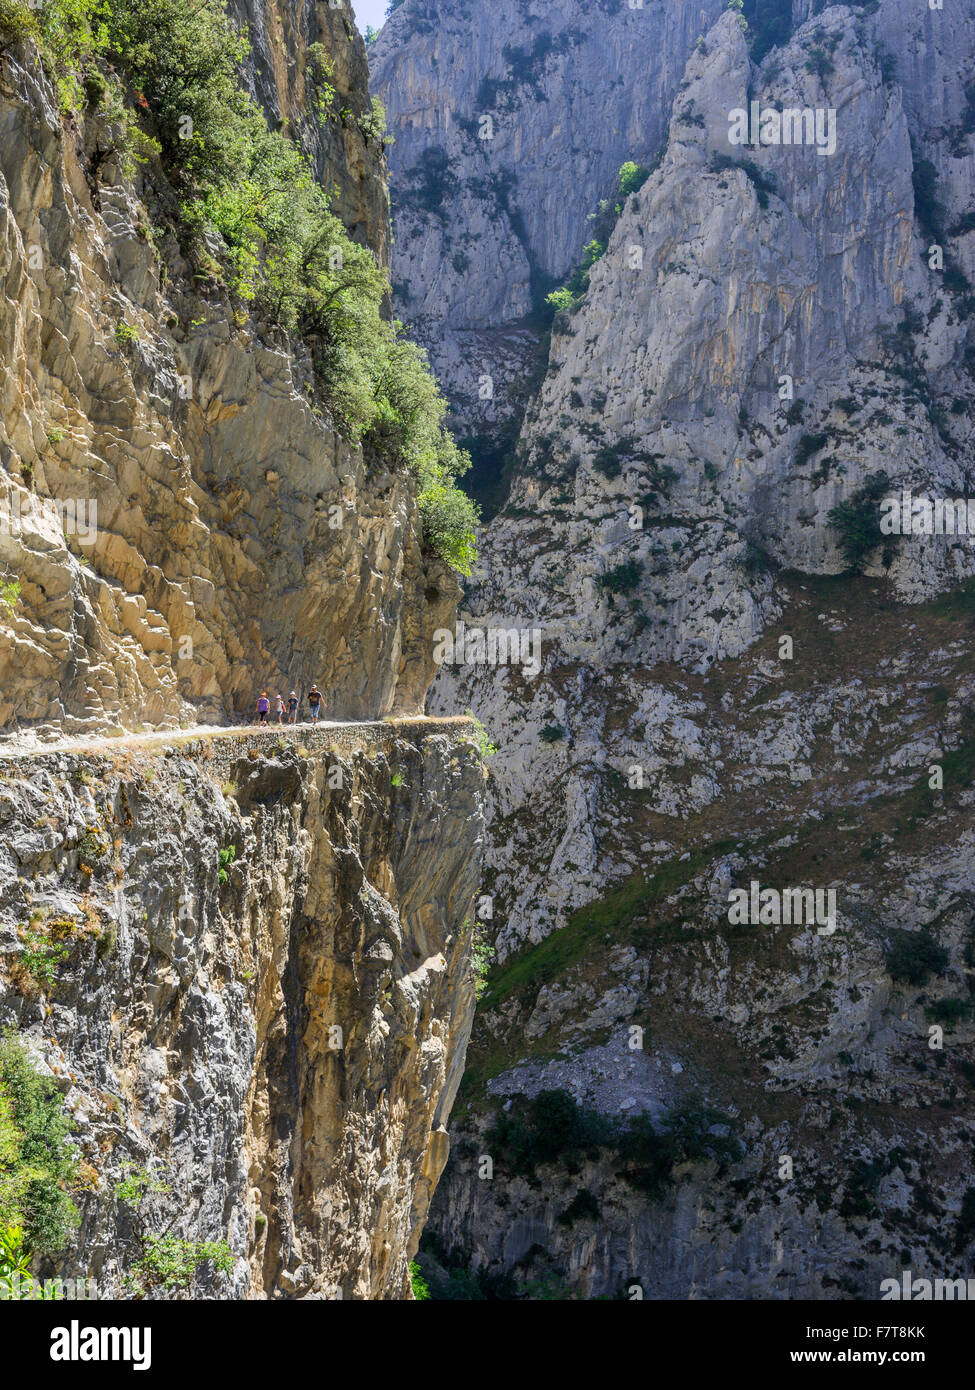 Sentiero escursionistico su uno scoglio attraverso la Gola di Cares, Parco Nazionale Picos de Europa, Caino, Castilla y León, Spagna Foto Stock